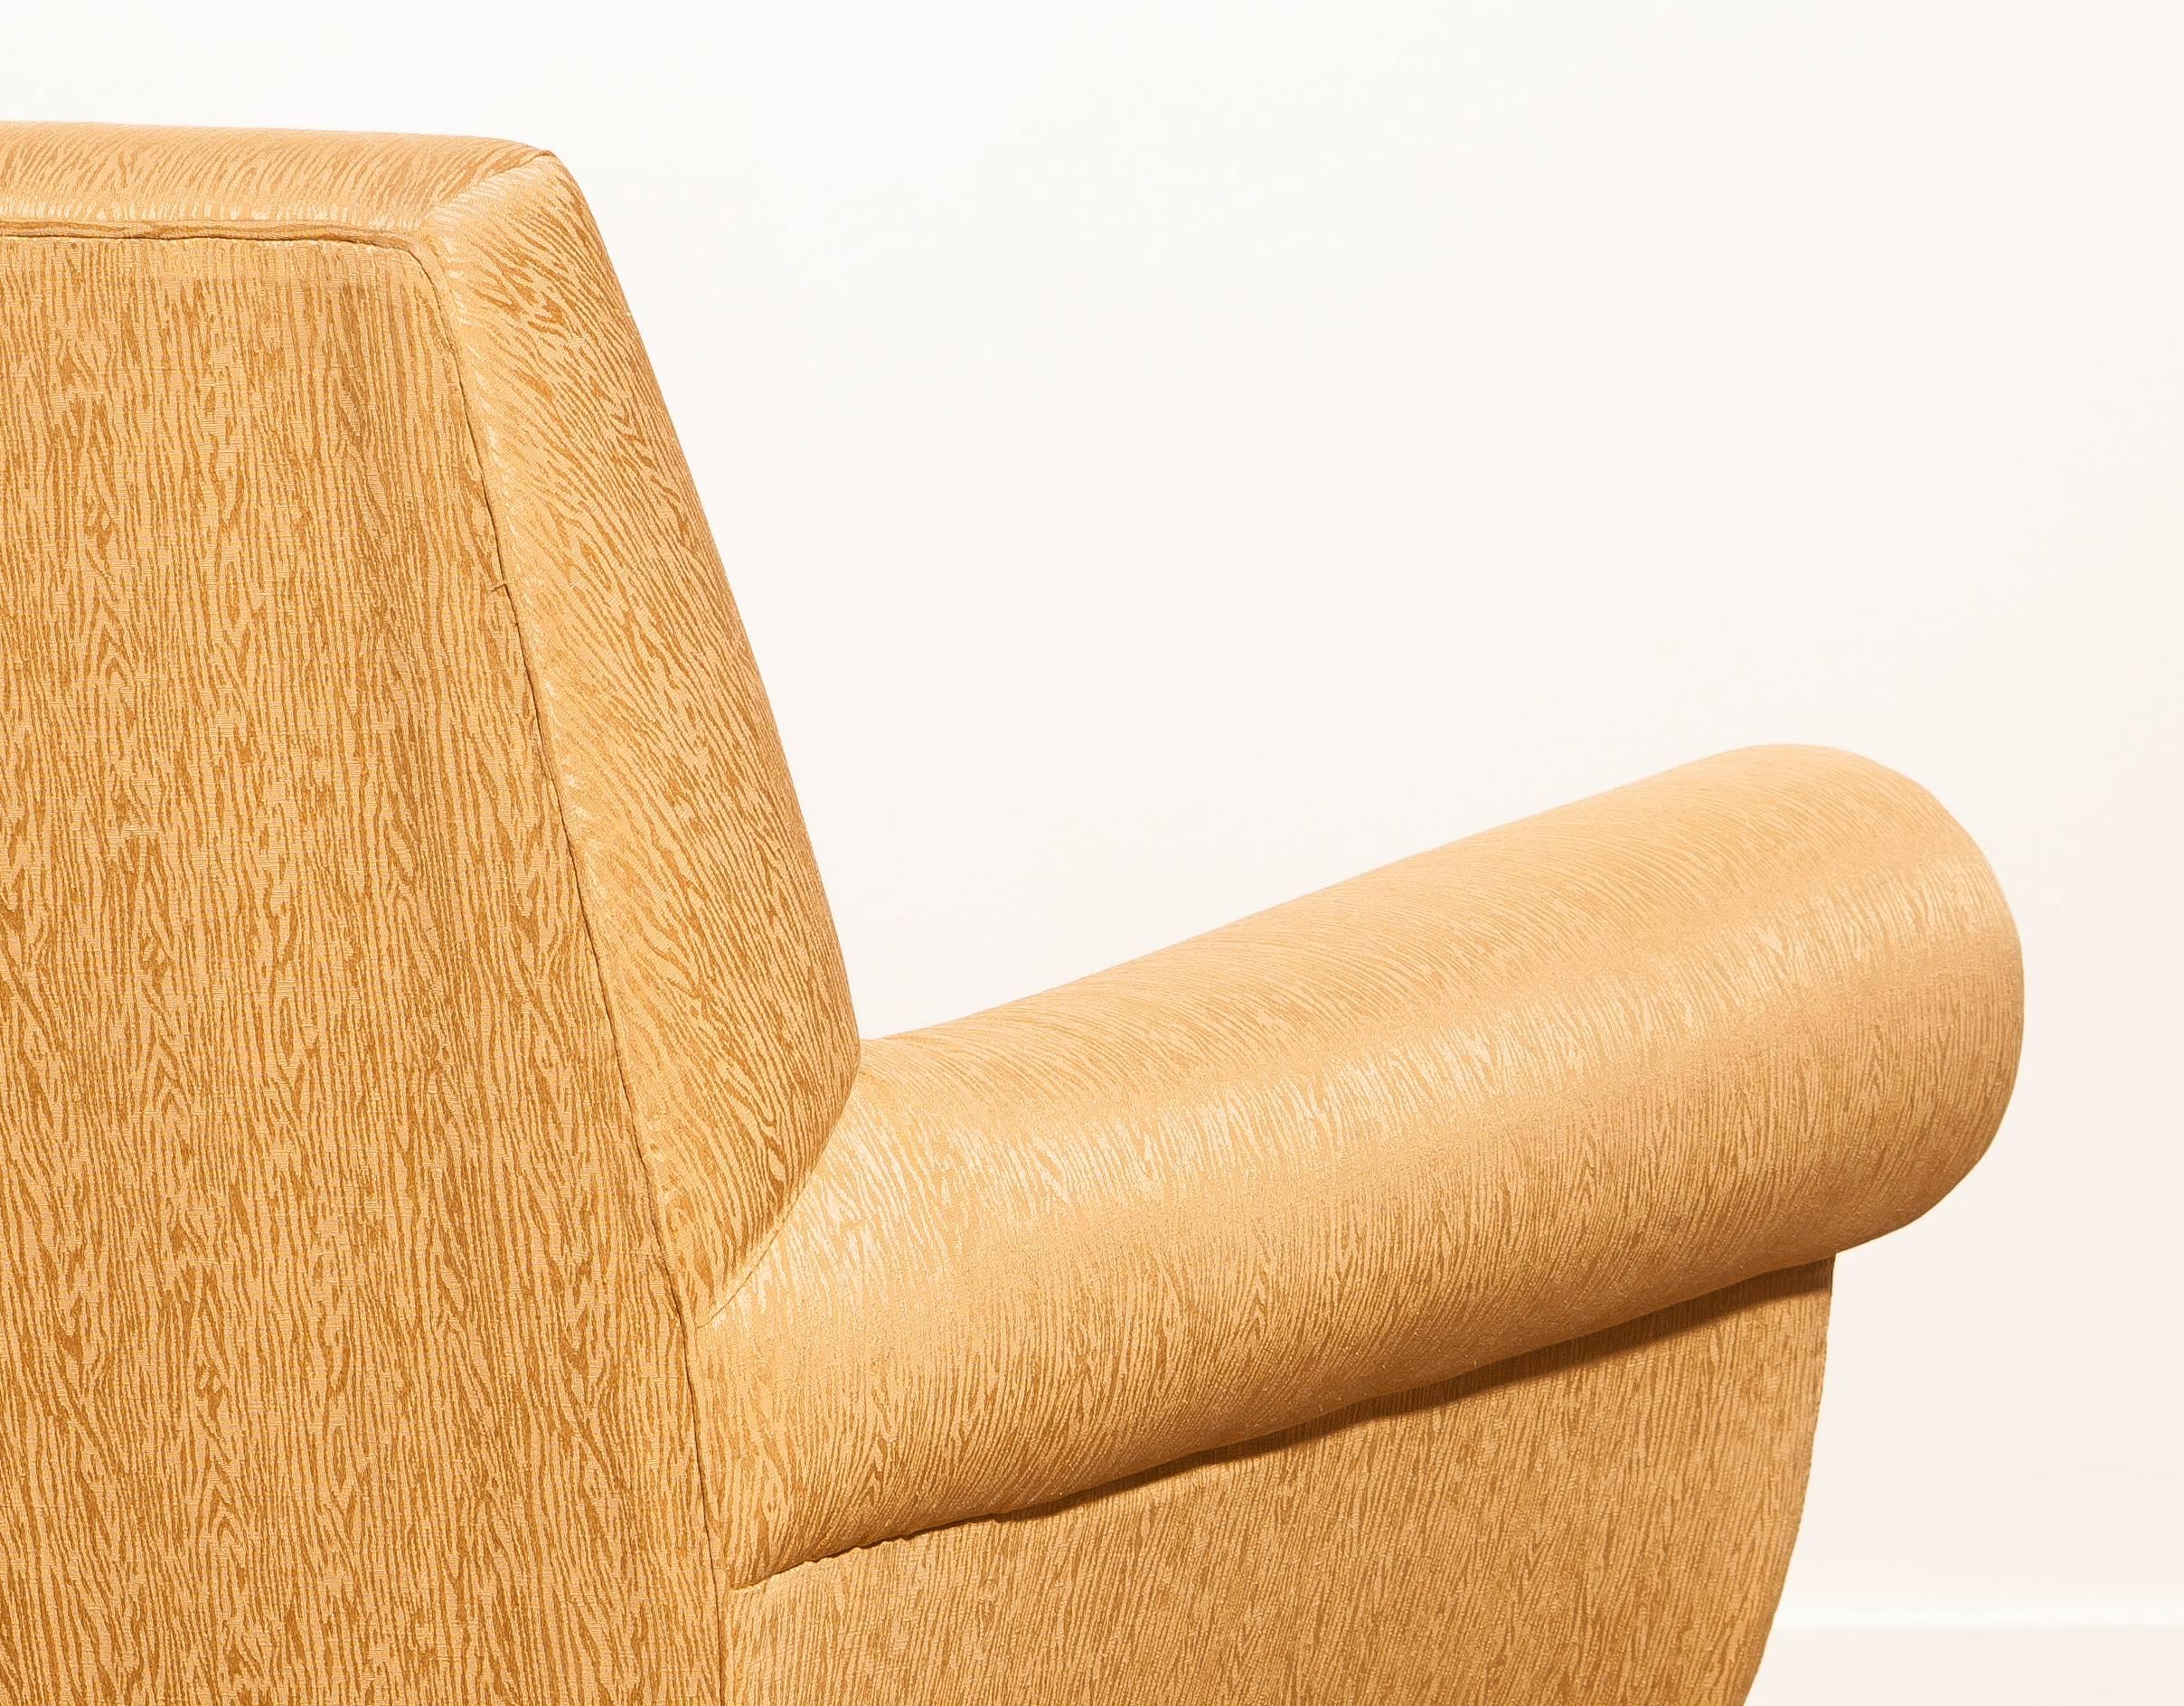 Gigi Radice for Minotti Lounge Chair, Golden Jacquard and Brass Stiletto Legs 1